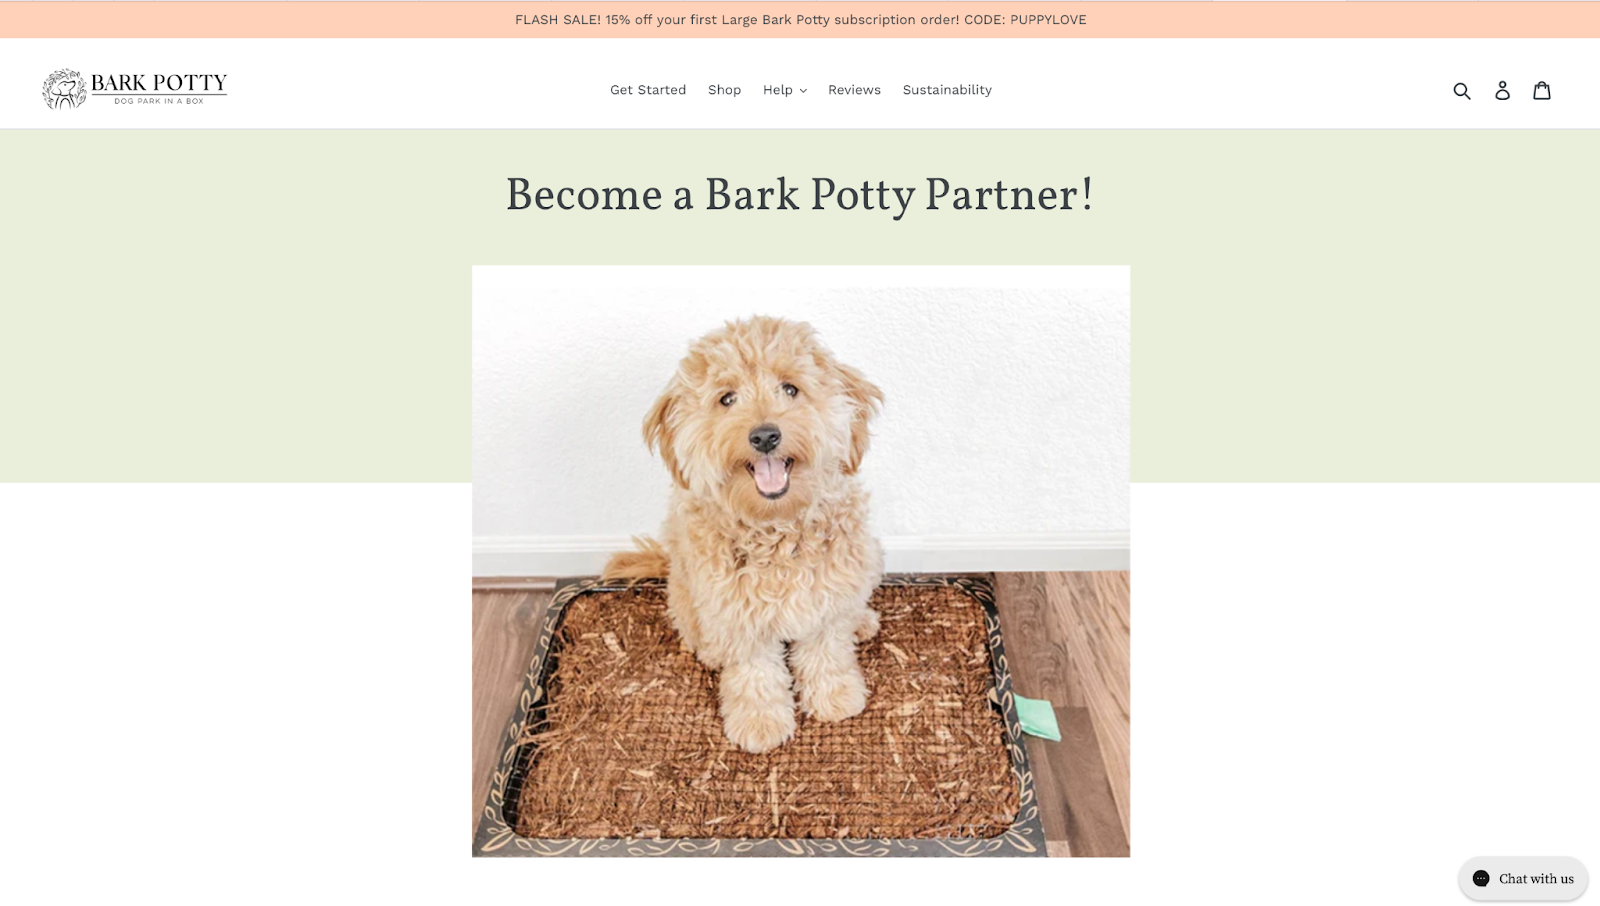 Bark Potty pet affiliate program landing page.